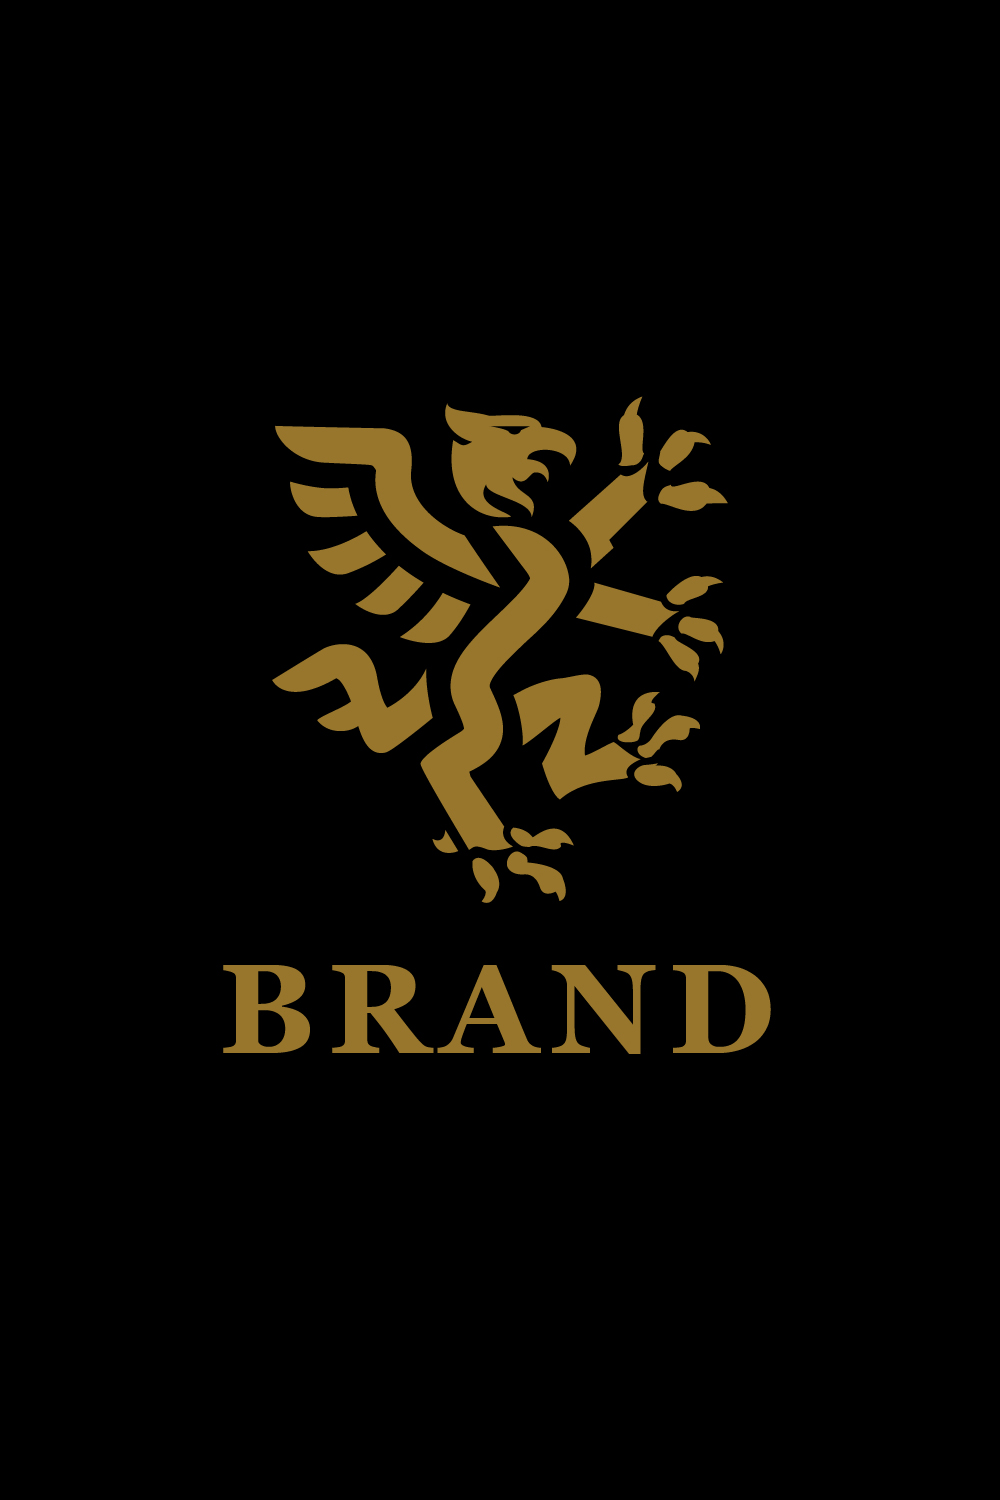 Griffin Heraldic Logos pinterest preview image.